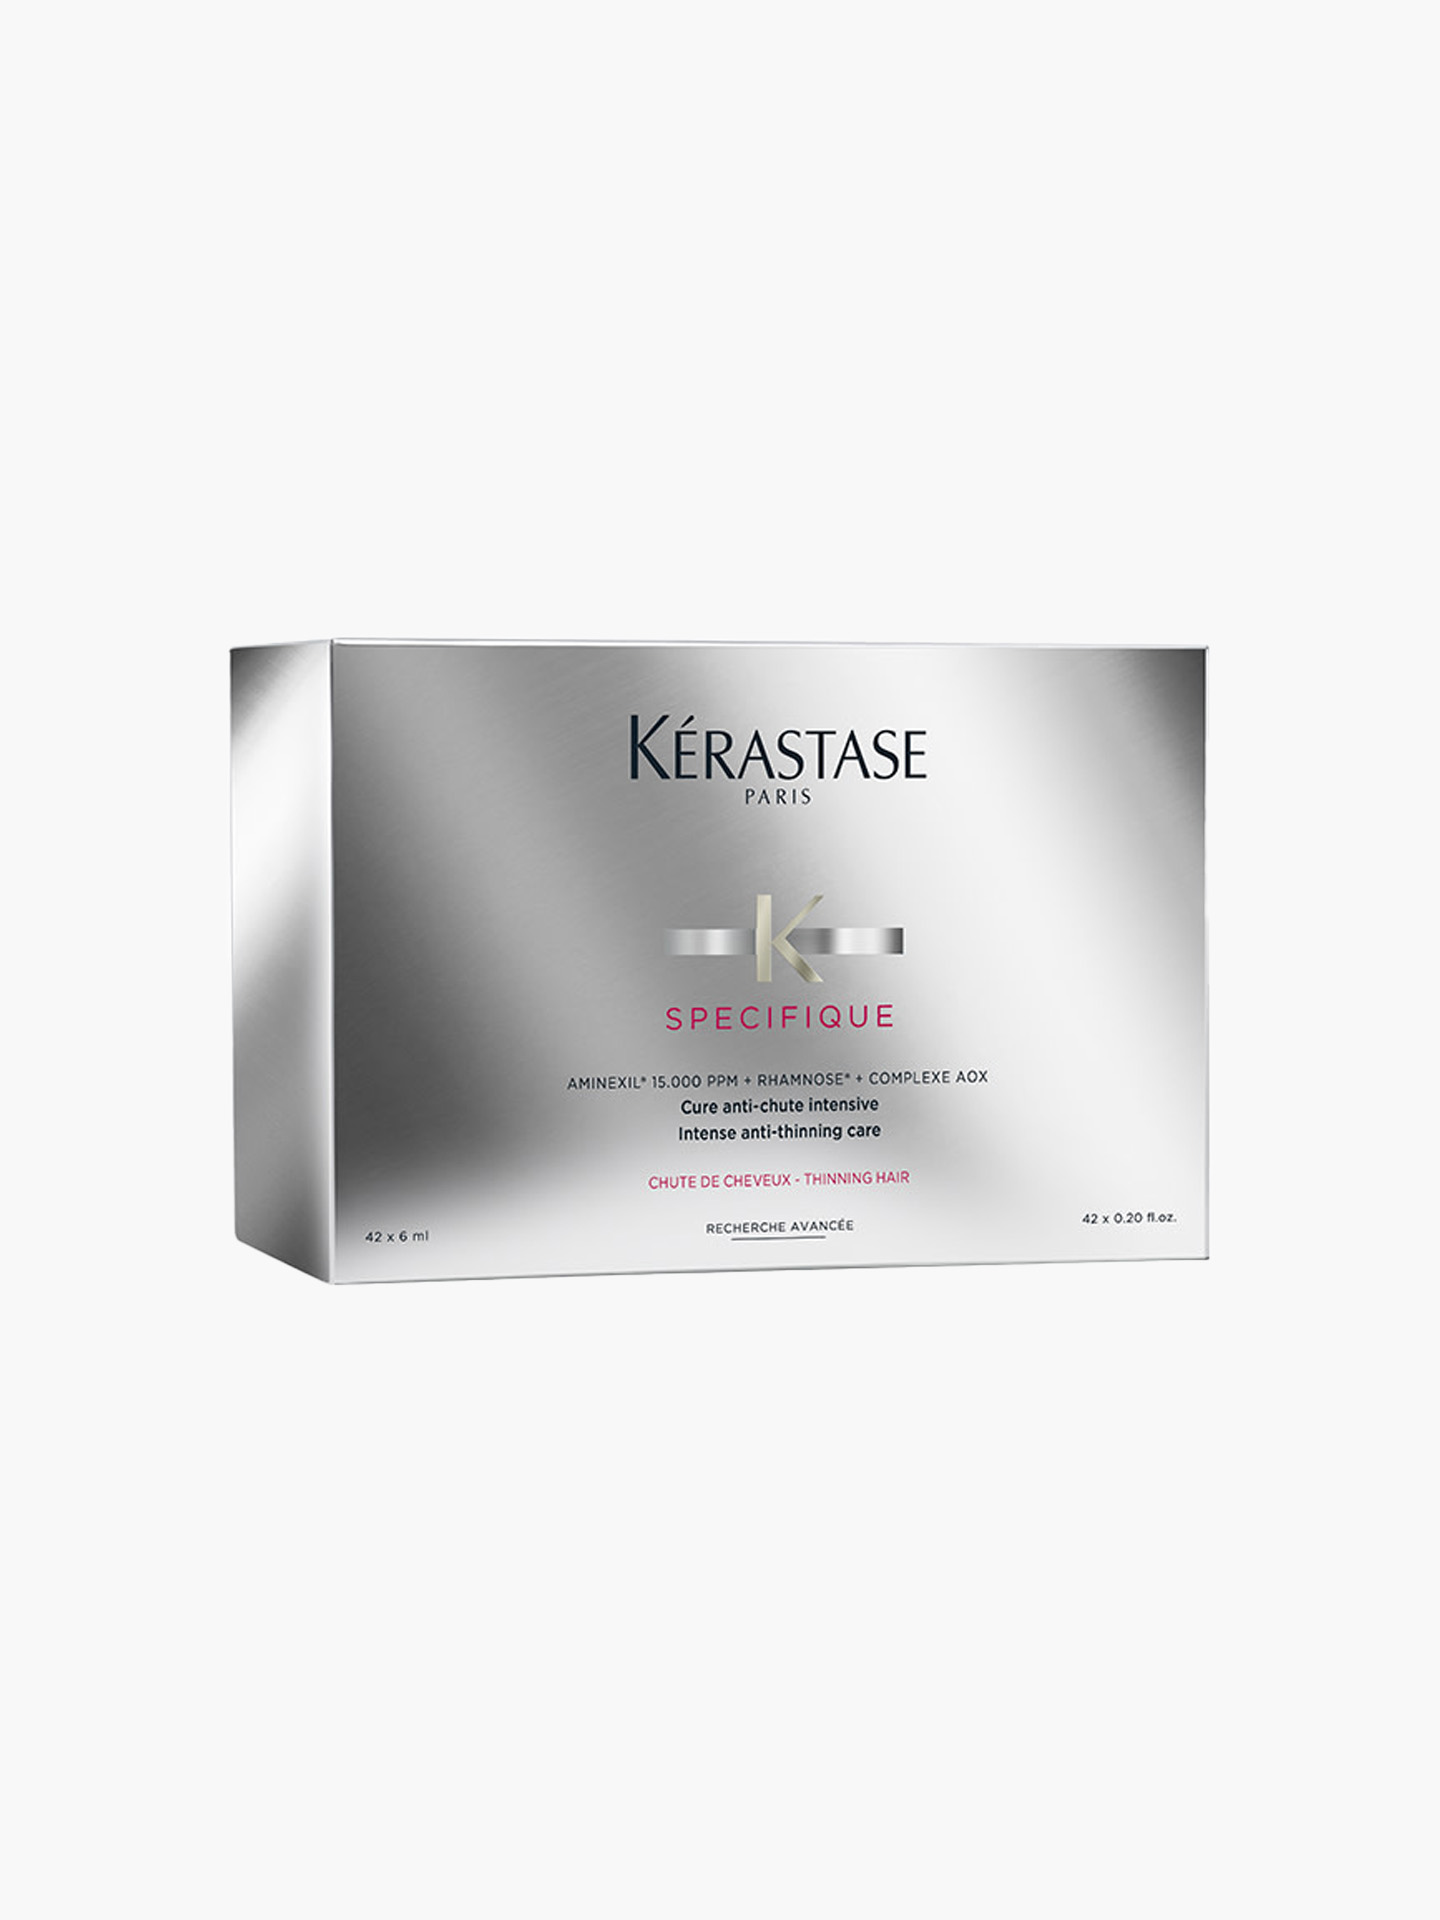 Kerastase Specifique Cure Anti-Chute Dökülme Karşıtı Bakım Kürü 42x6ml